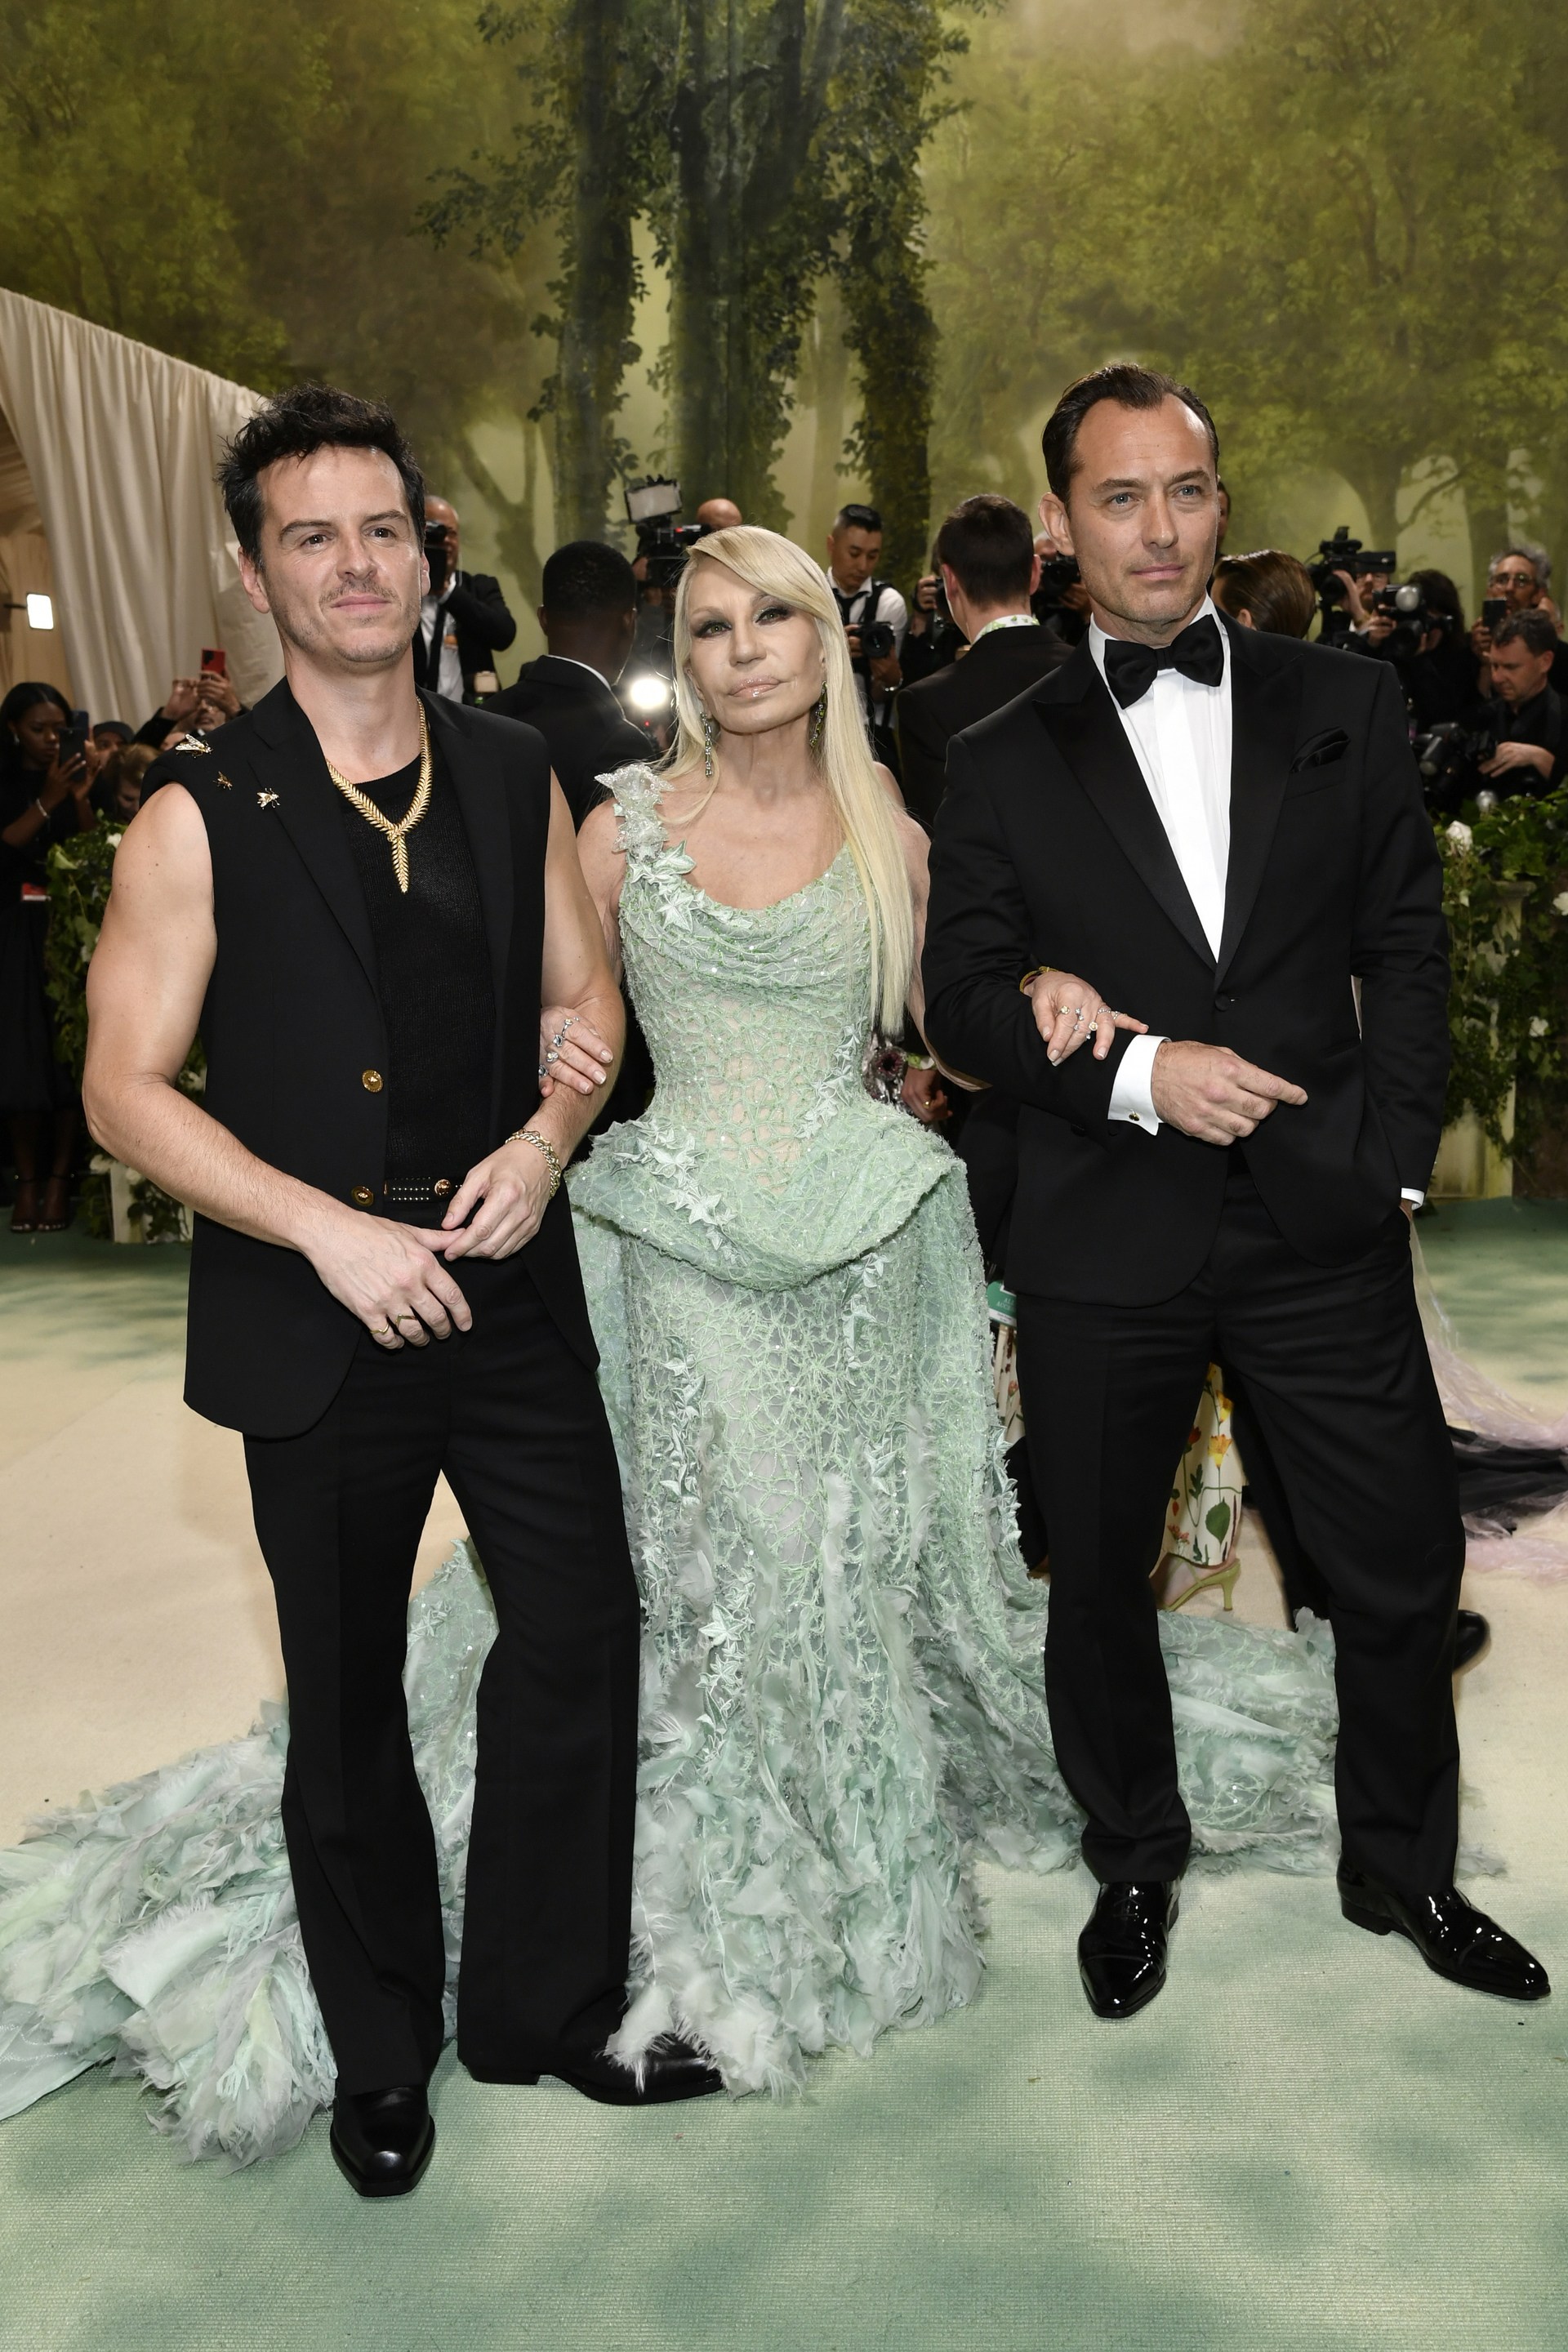 Andrew Scott, from left, Donatella Versace, and Jude Law attend The Metropolitan Museum of Art’s Costume Institute benefit gala (Evan Agostini/Invision/AP).